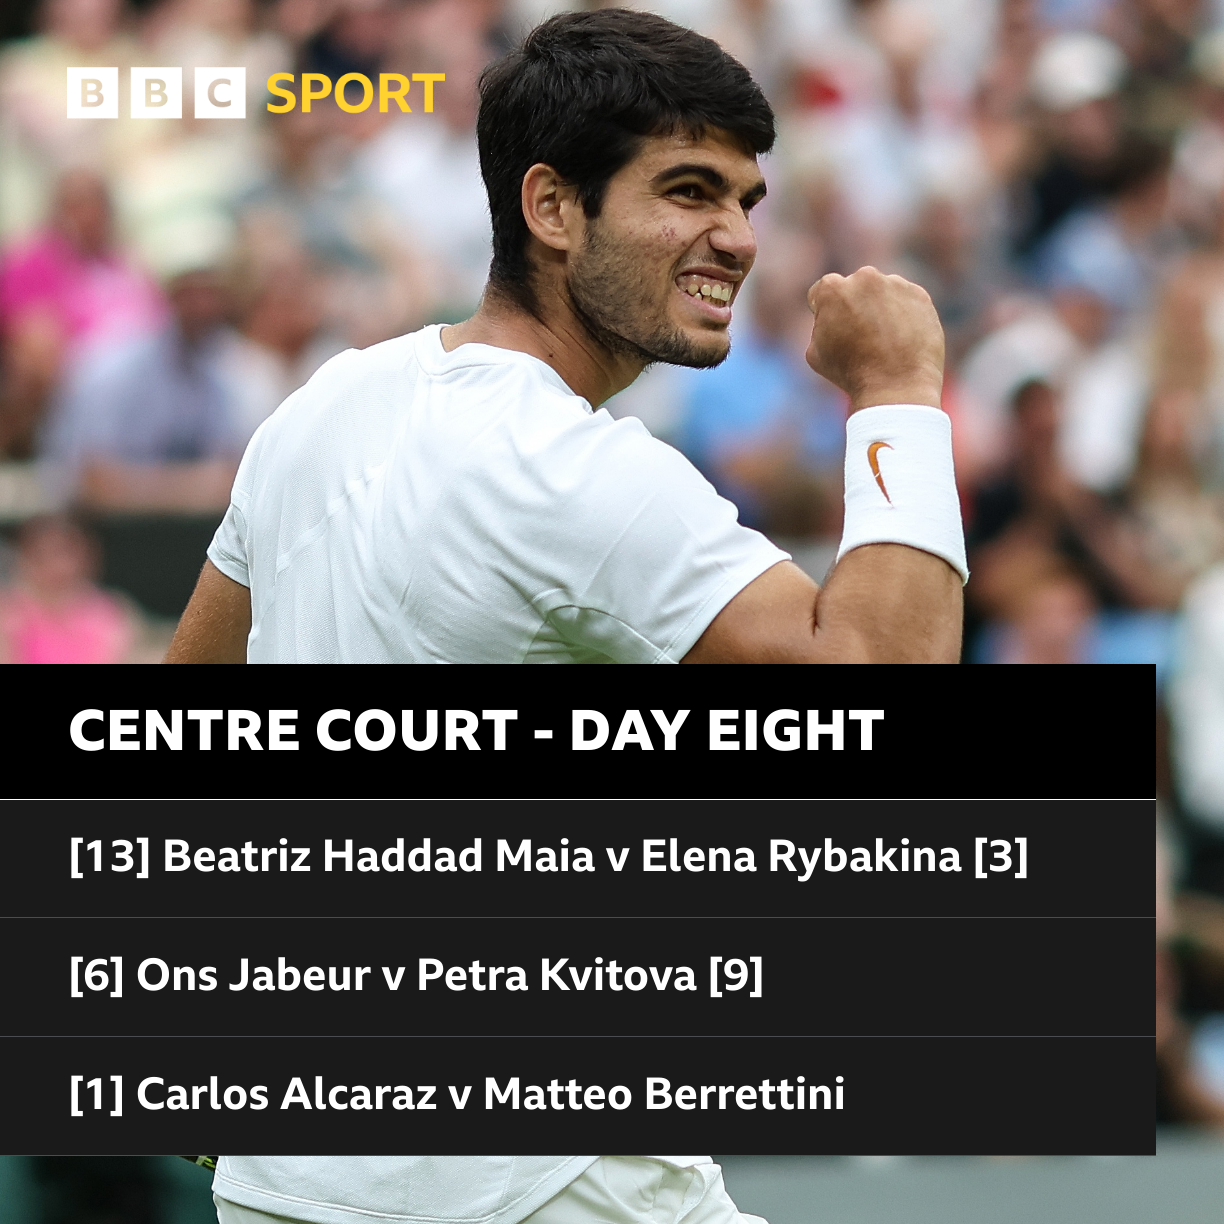 Wimbledon LIVE Watch BBC TV coverage, follow radio and text commentary - Novak Djokovic, Iga Swiatek and Jessica Pegula play on day seven - Live